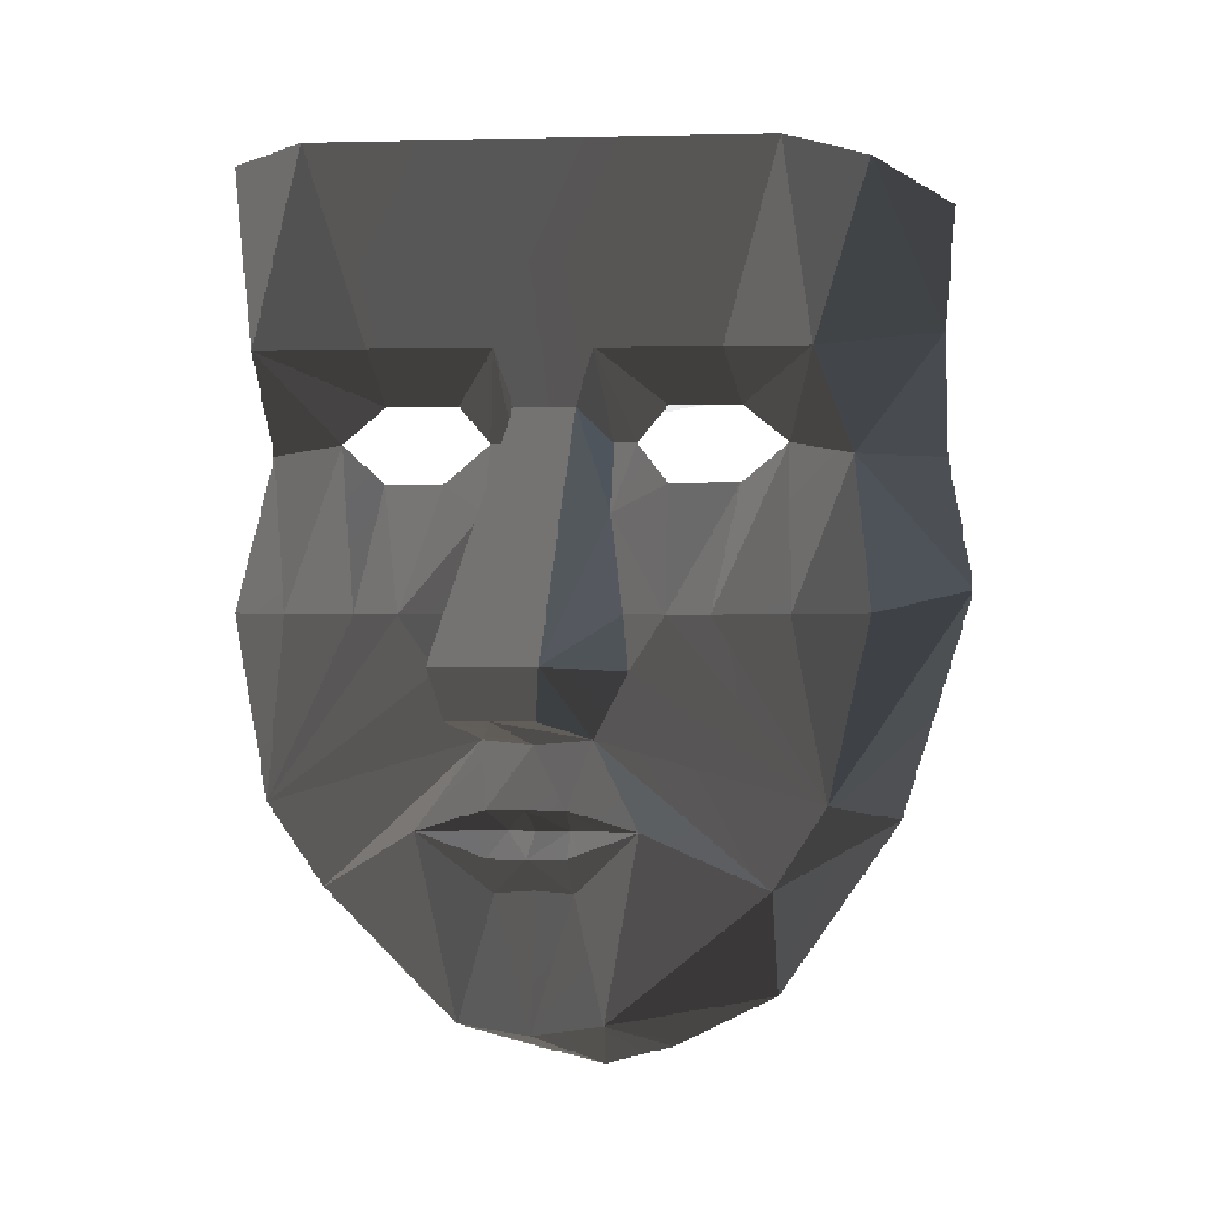 Mask. 3D models. Create Papercraft, pepakura models and download schemes